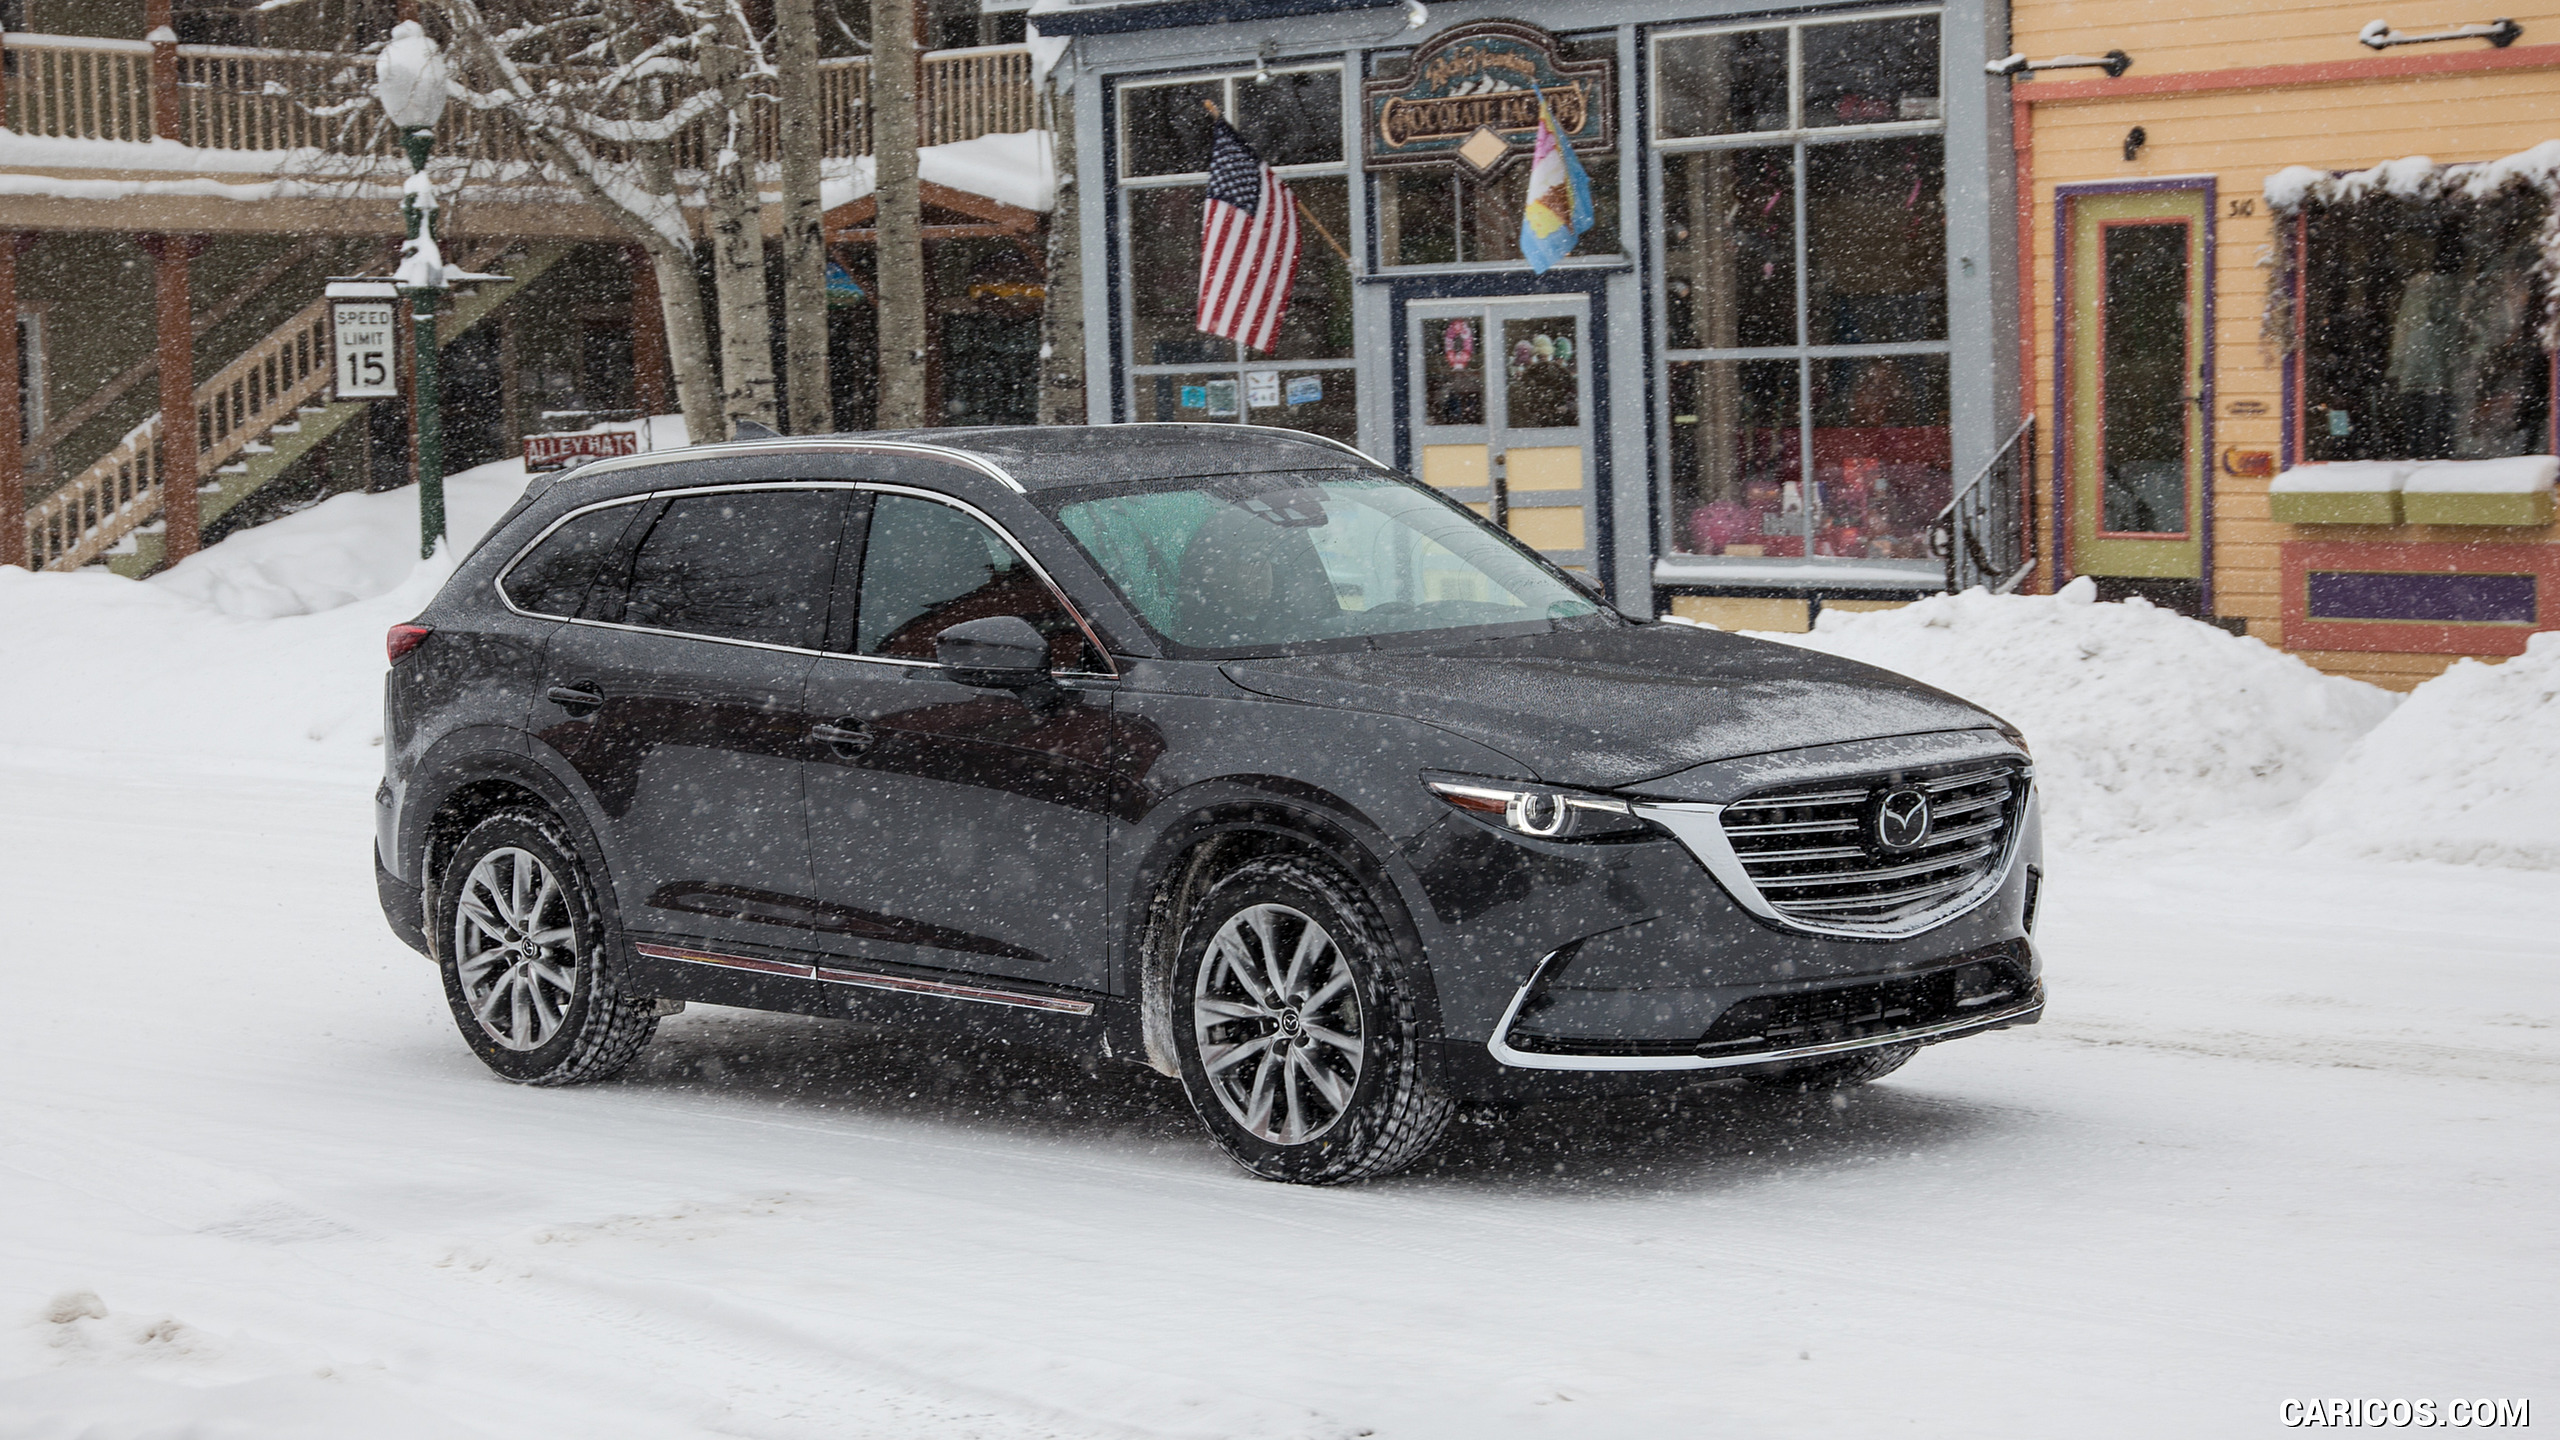 2016 Mazda CX-9 in Snow - Front Three-Quarter, #55 of 69